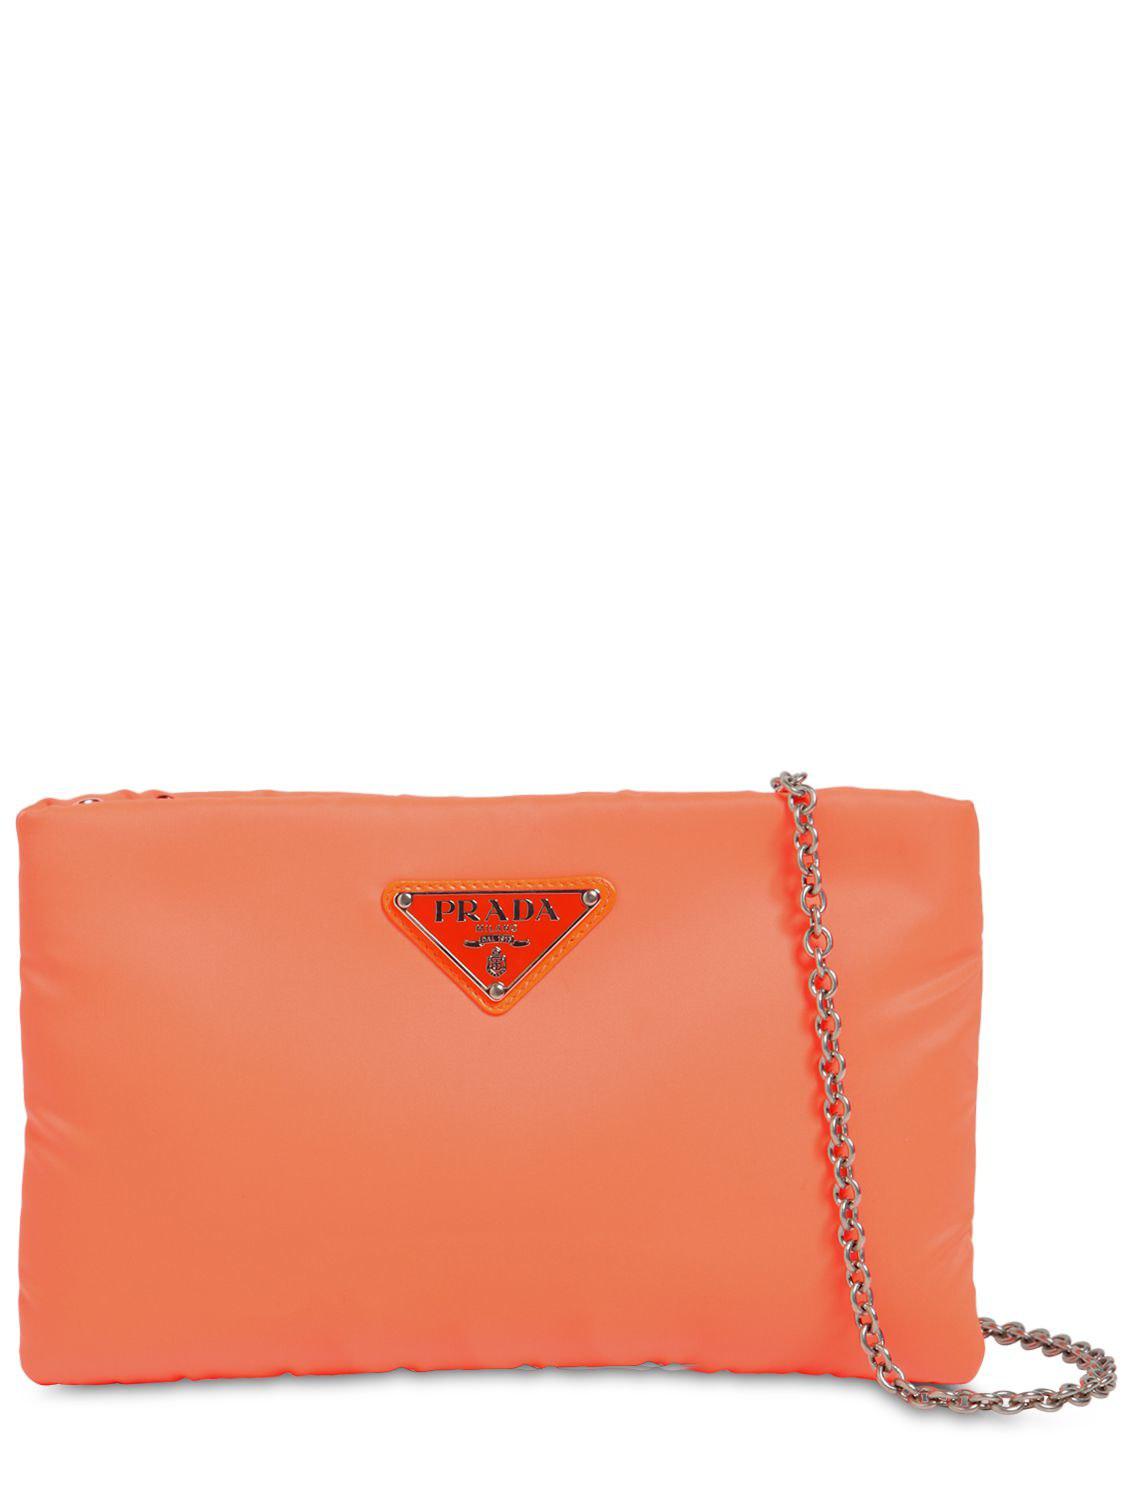 Prada Madras Woven Zip Clutch - Orange Clutches, Handbags - PRA844412